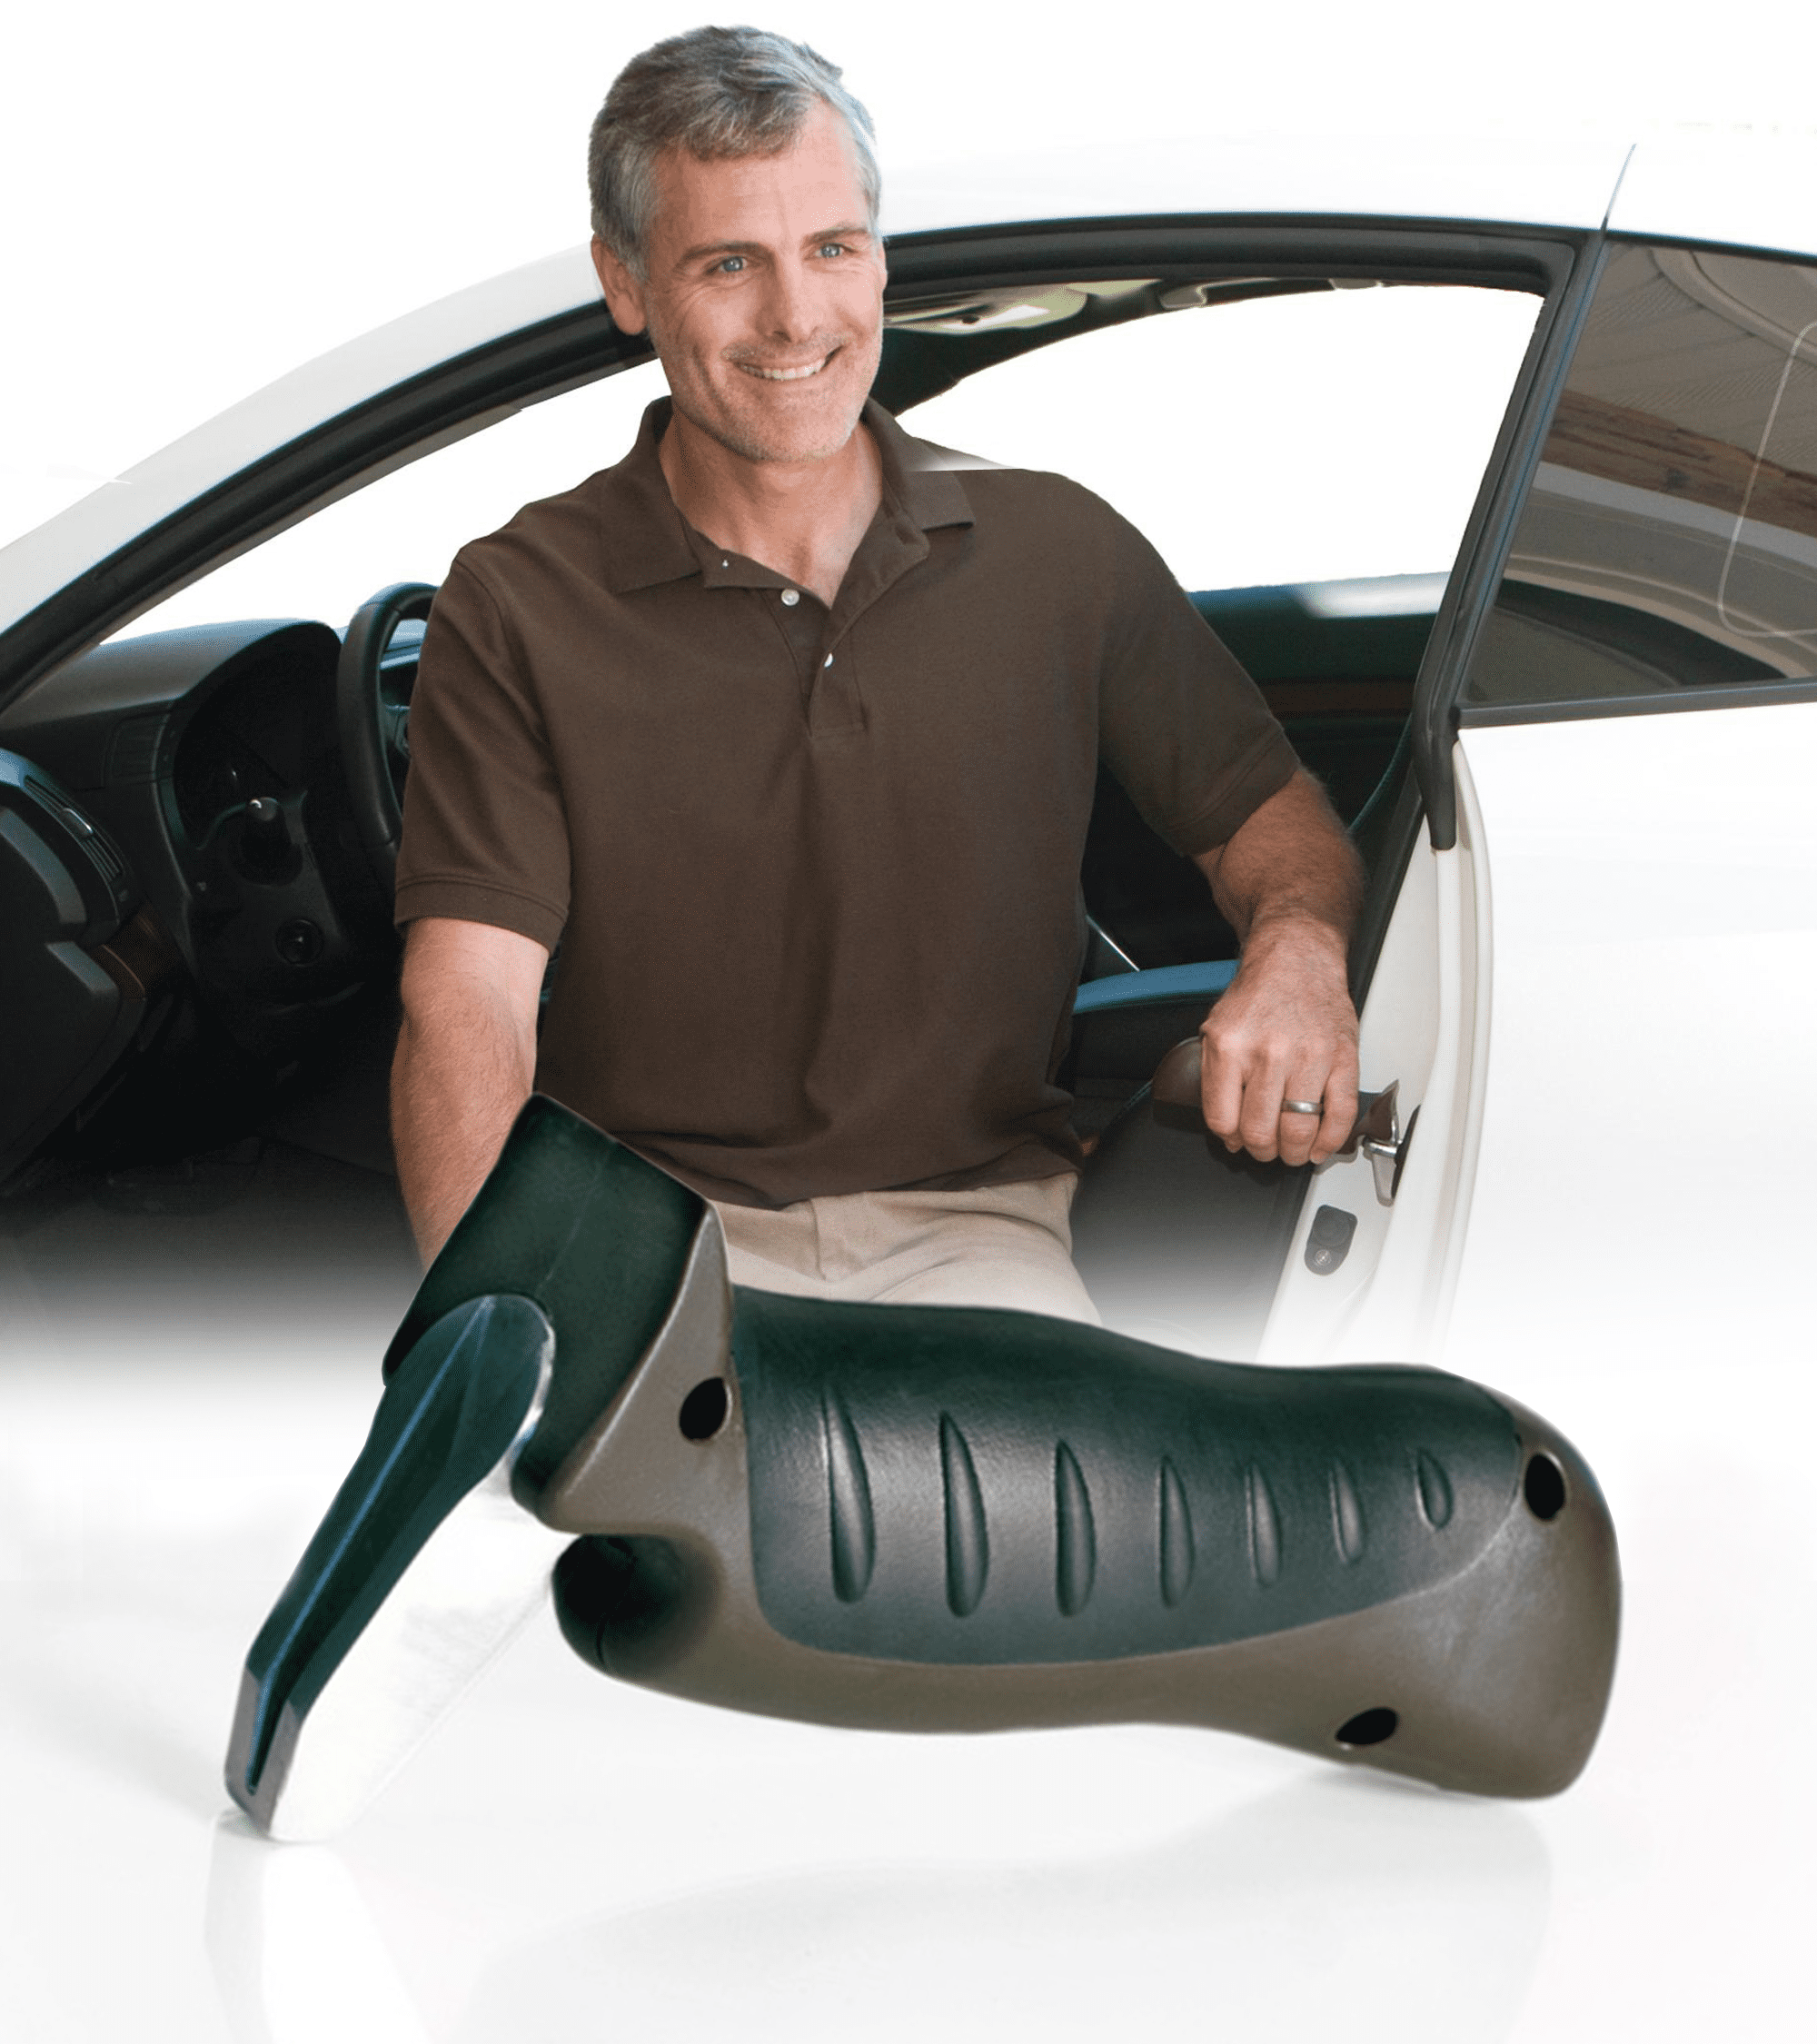 Automotive Support Handle Mobility Aid & Car Vehicle Cane Stand Assist Grab Bar Handles Blue EnRand Auto Cane